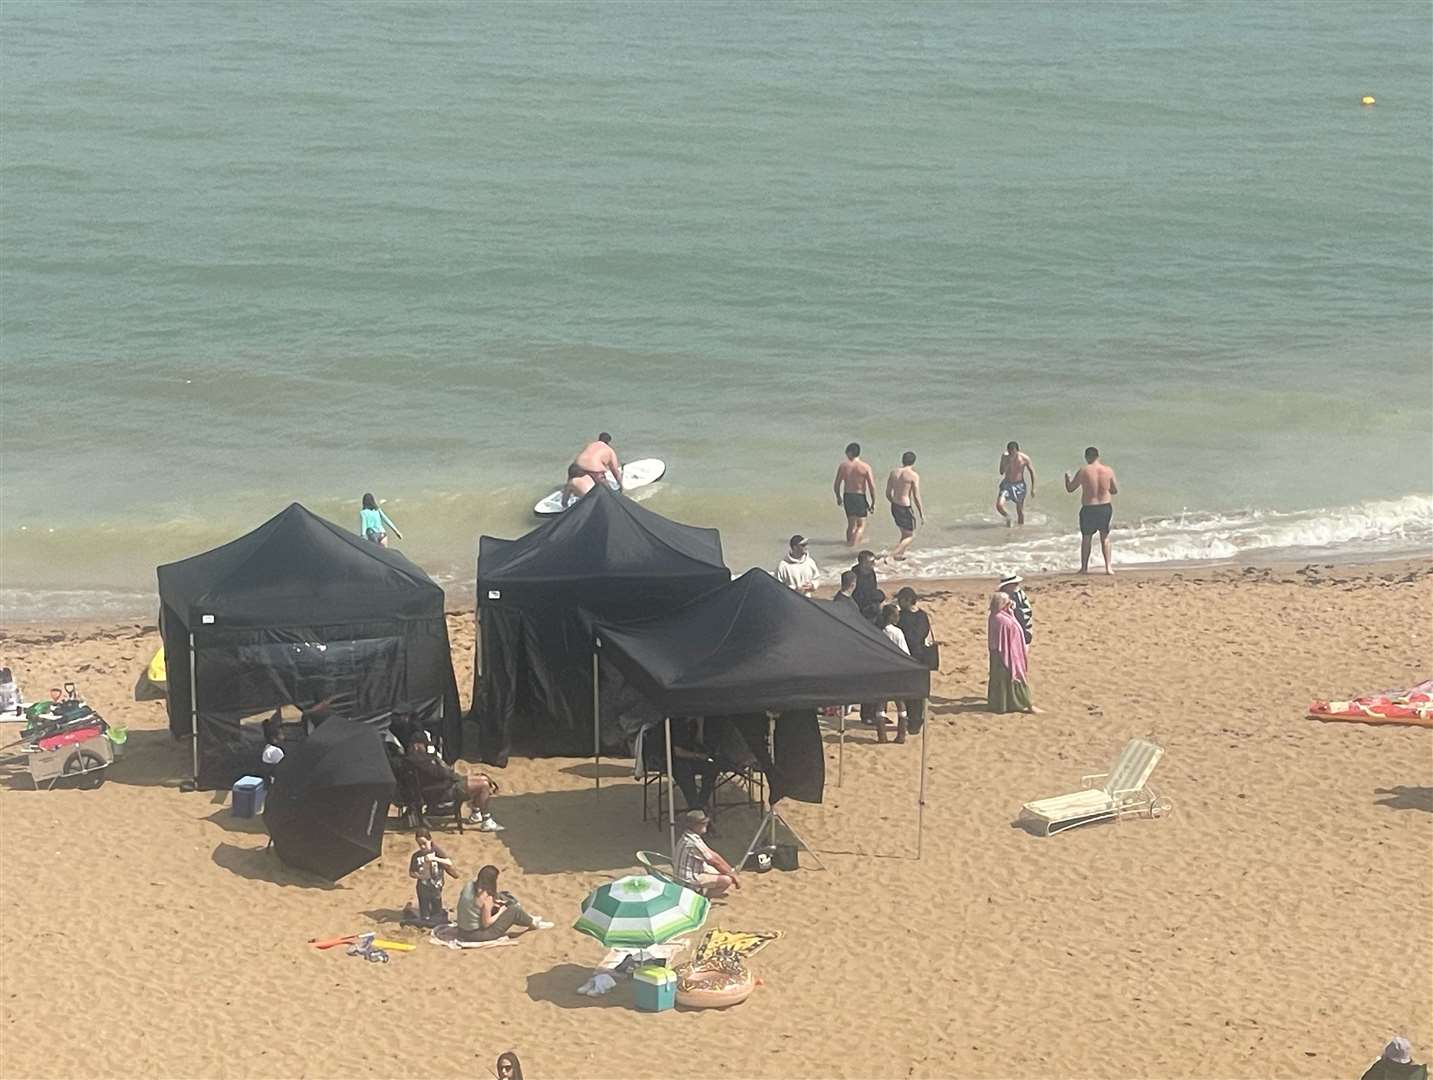 Film crews set up on the sand